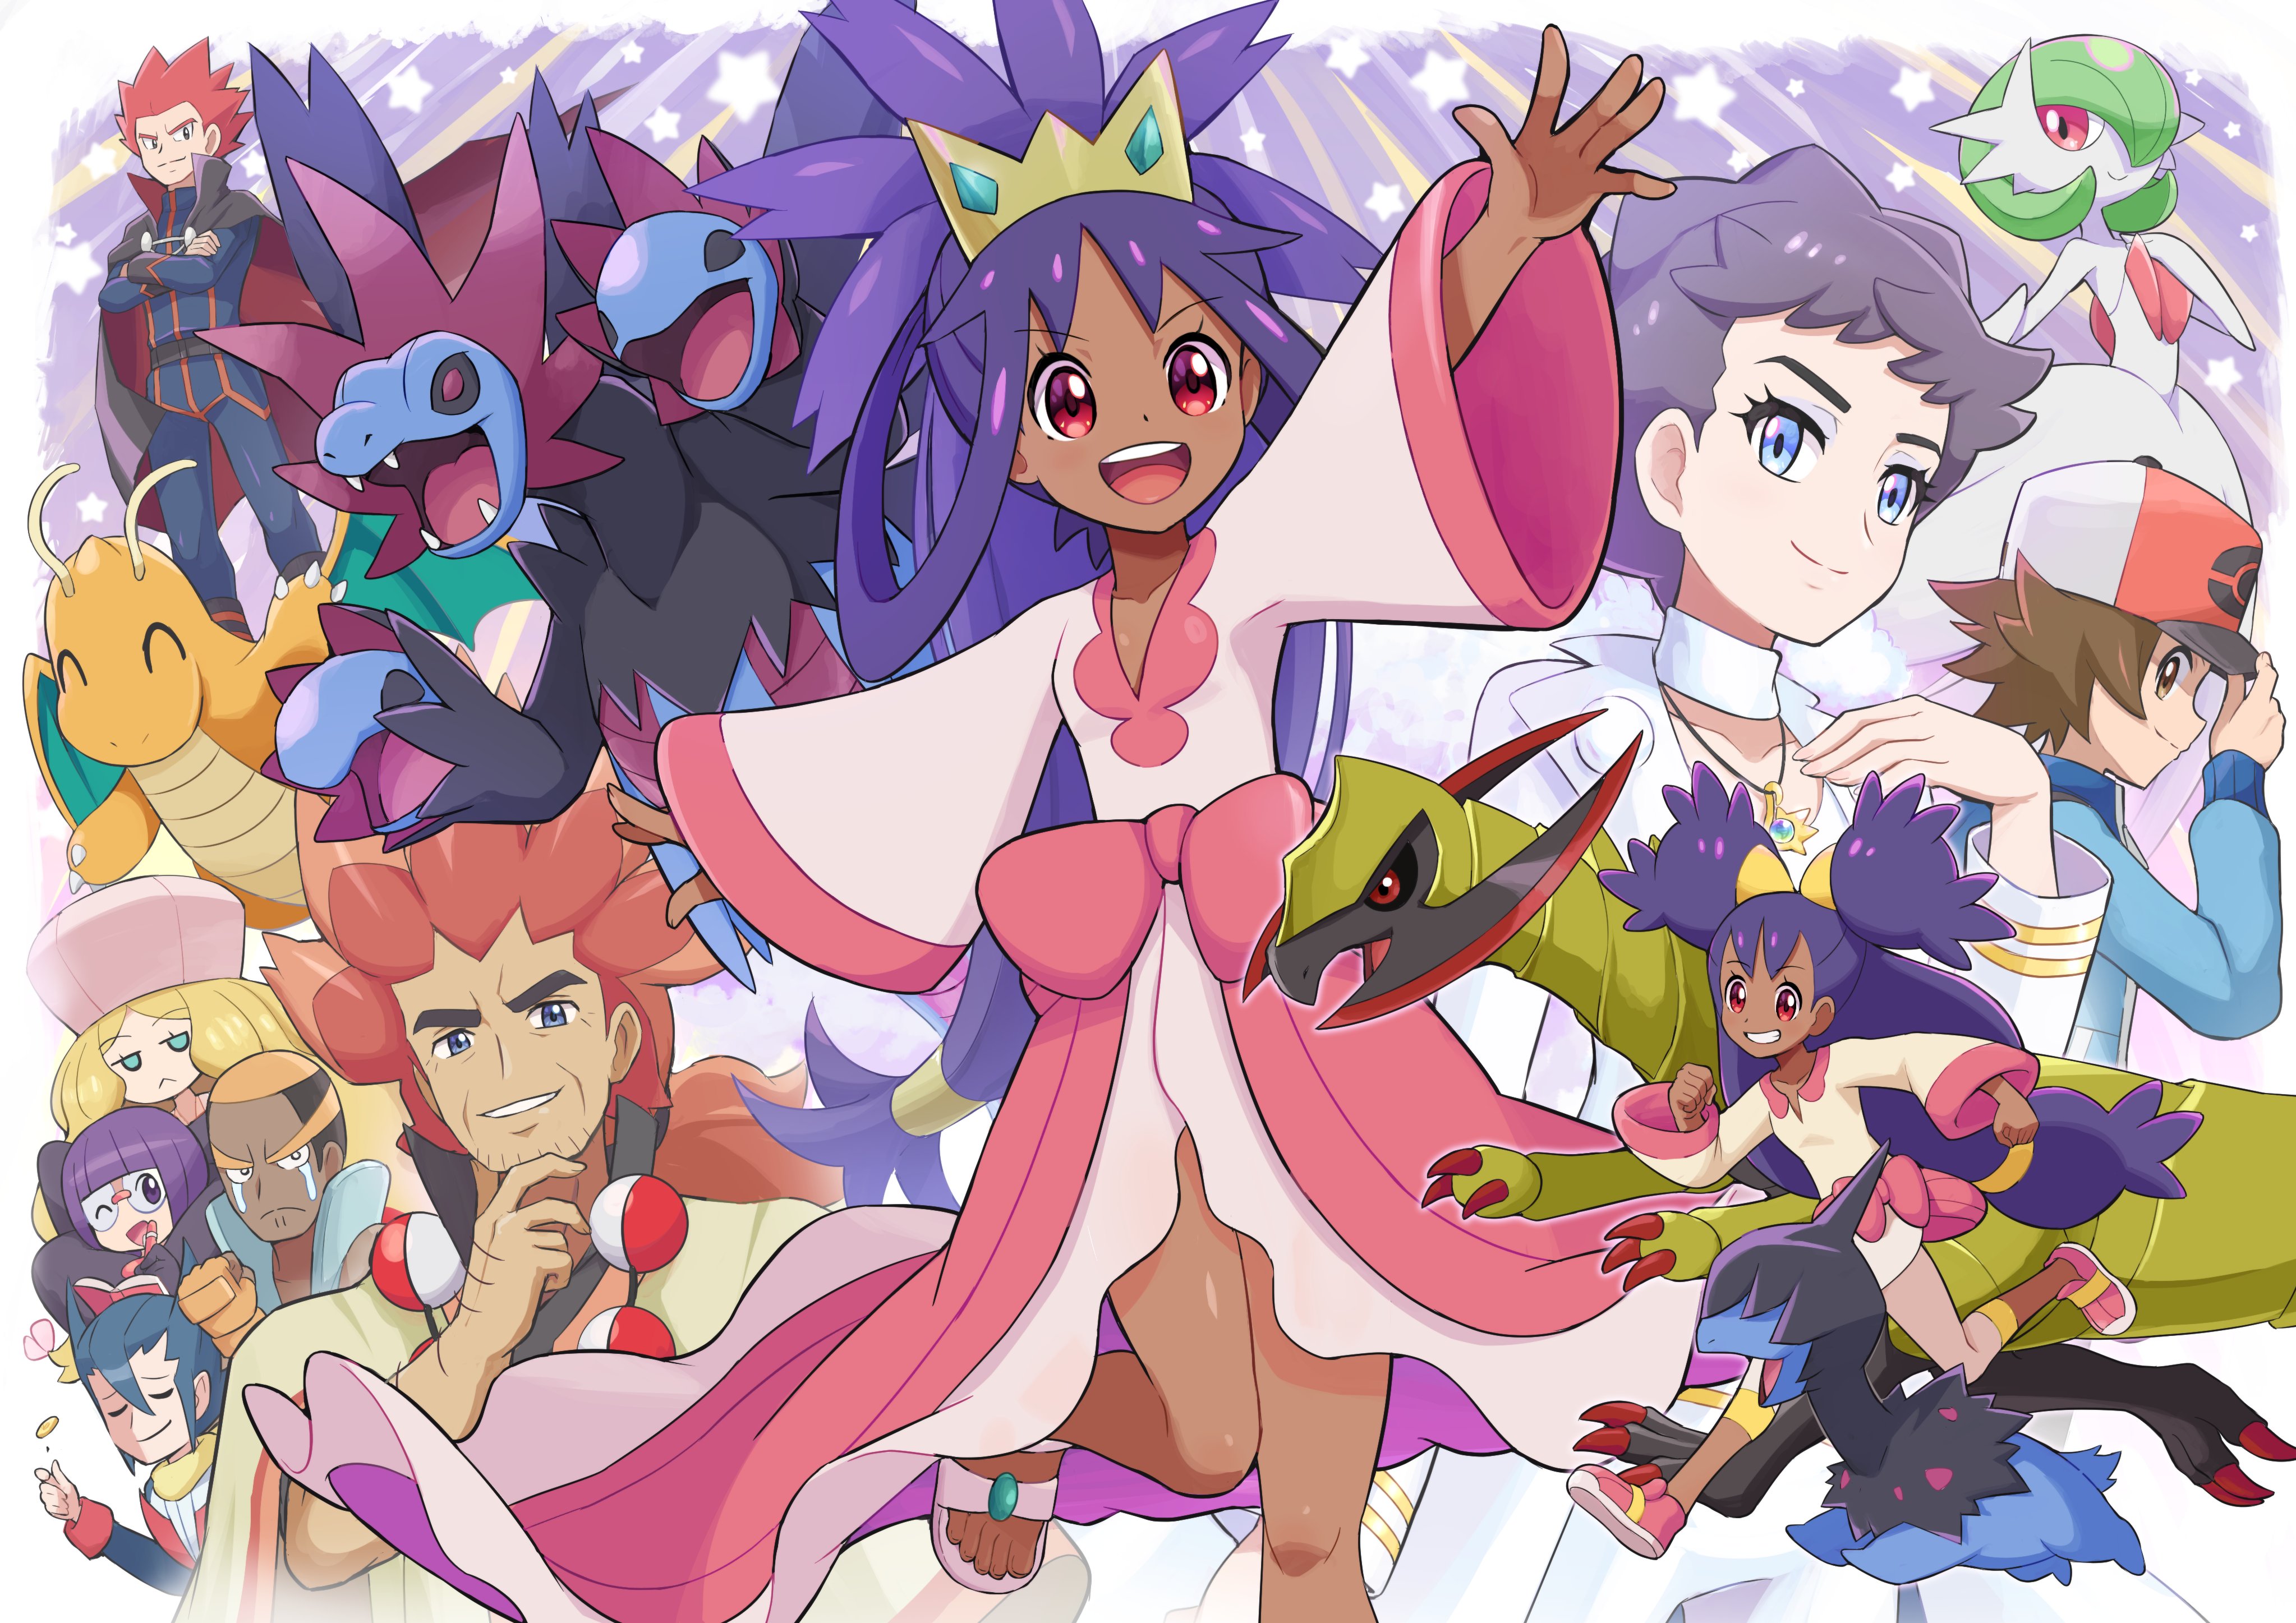 Anime Pokémon 4k Ultra HD Wallpaper by moa151